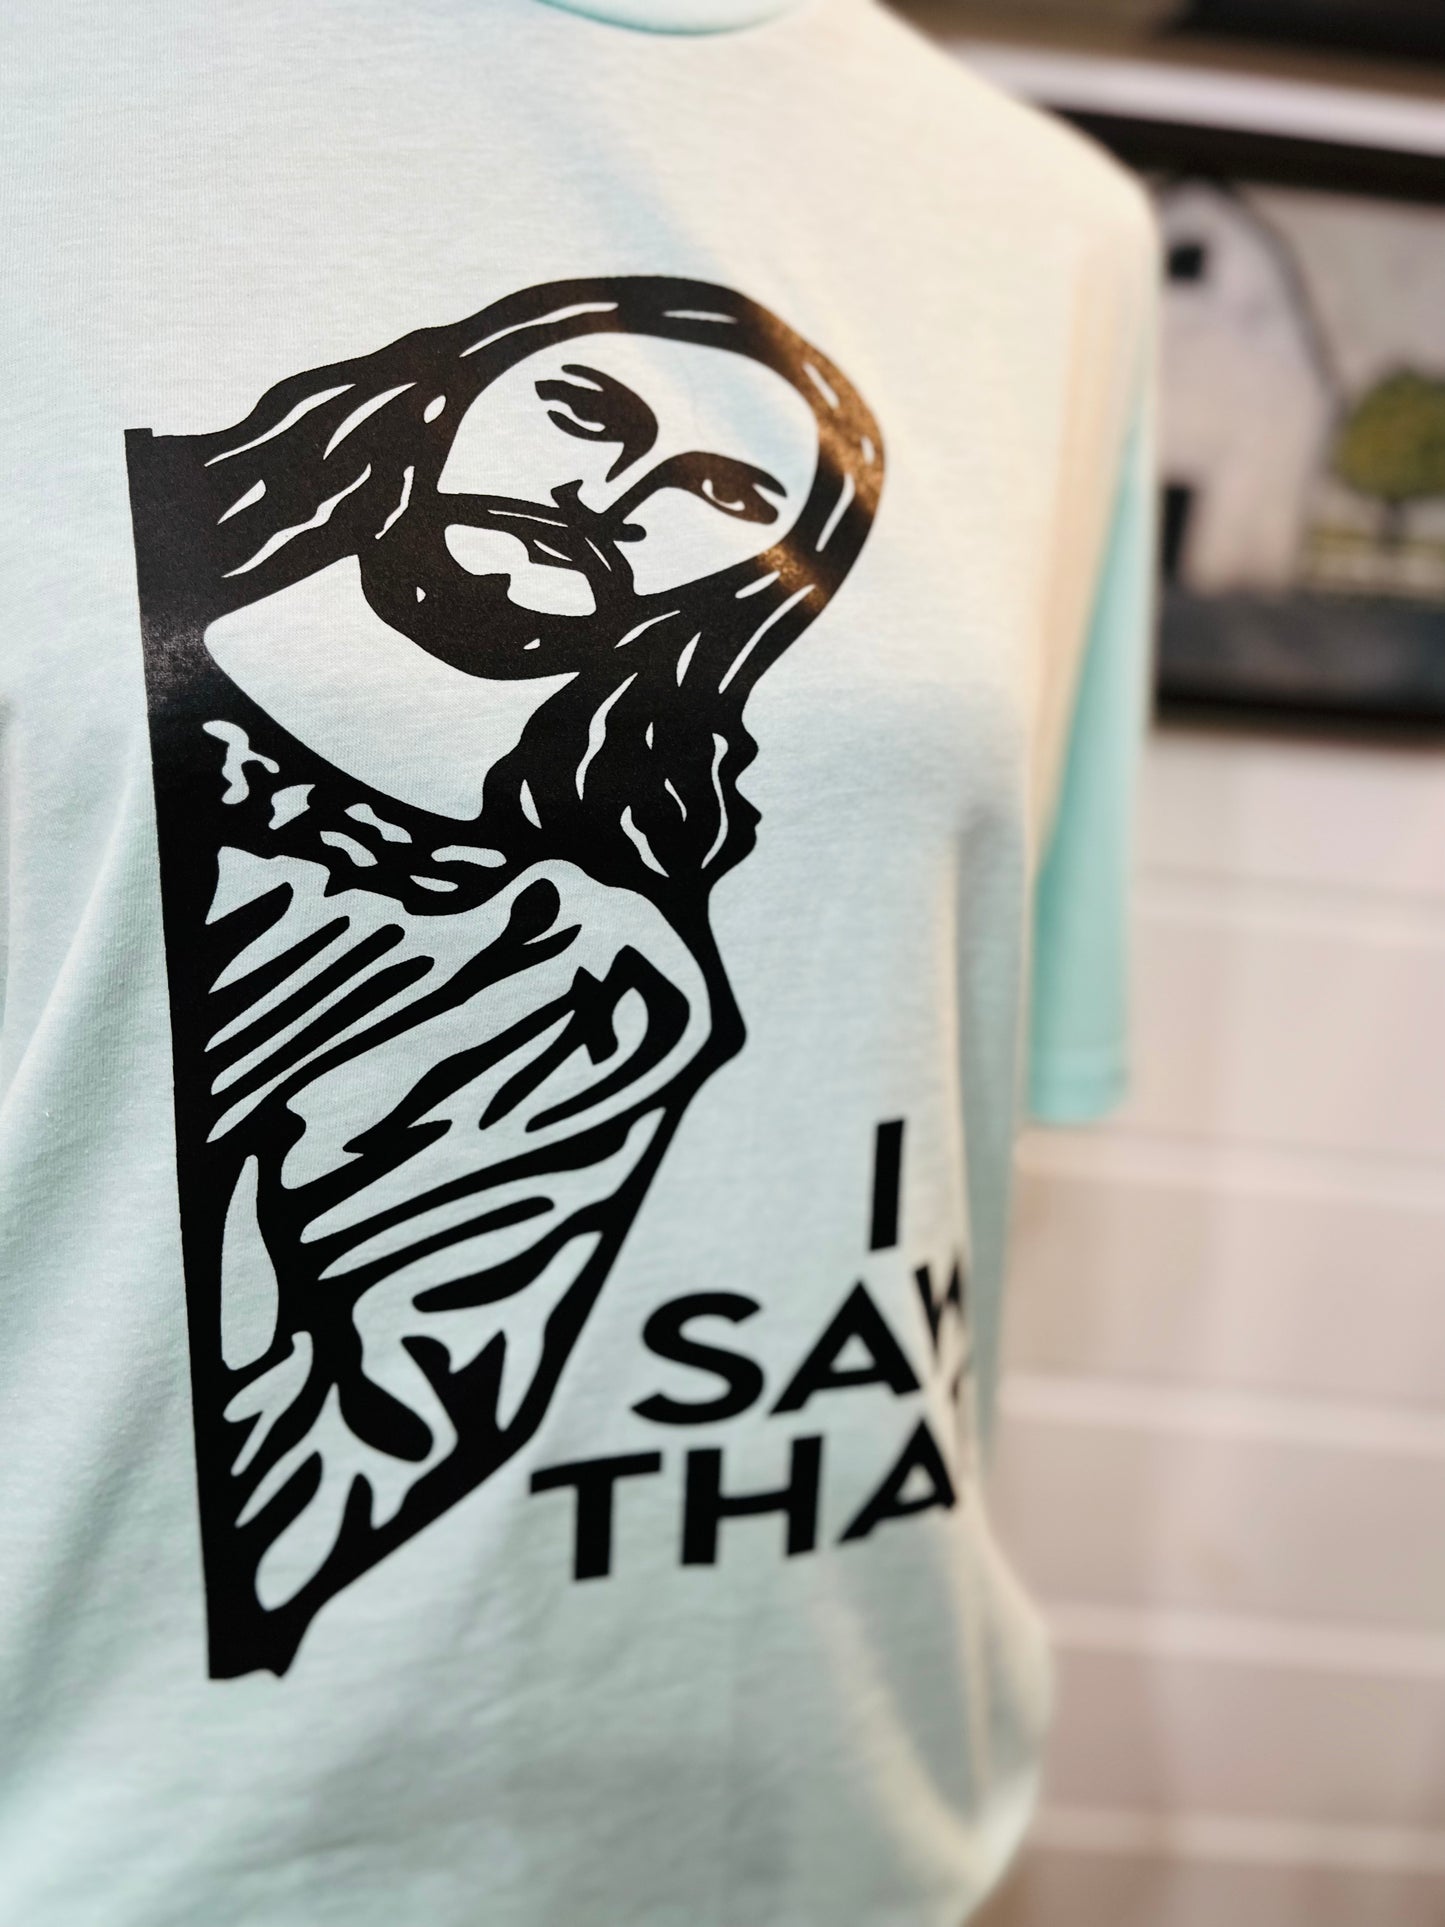 I Saw That- Jesus tee